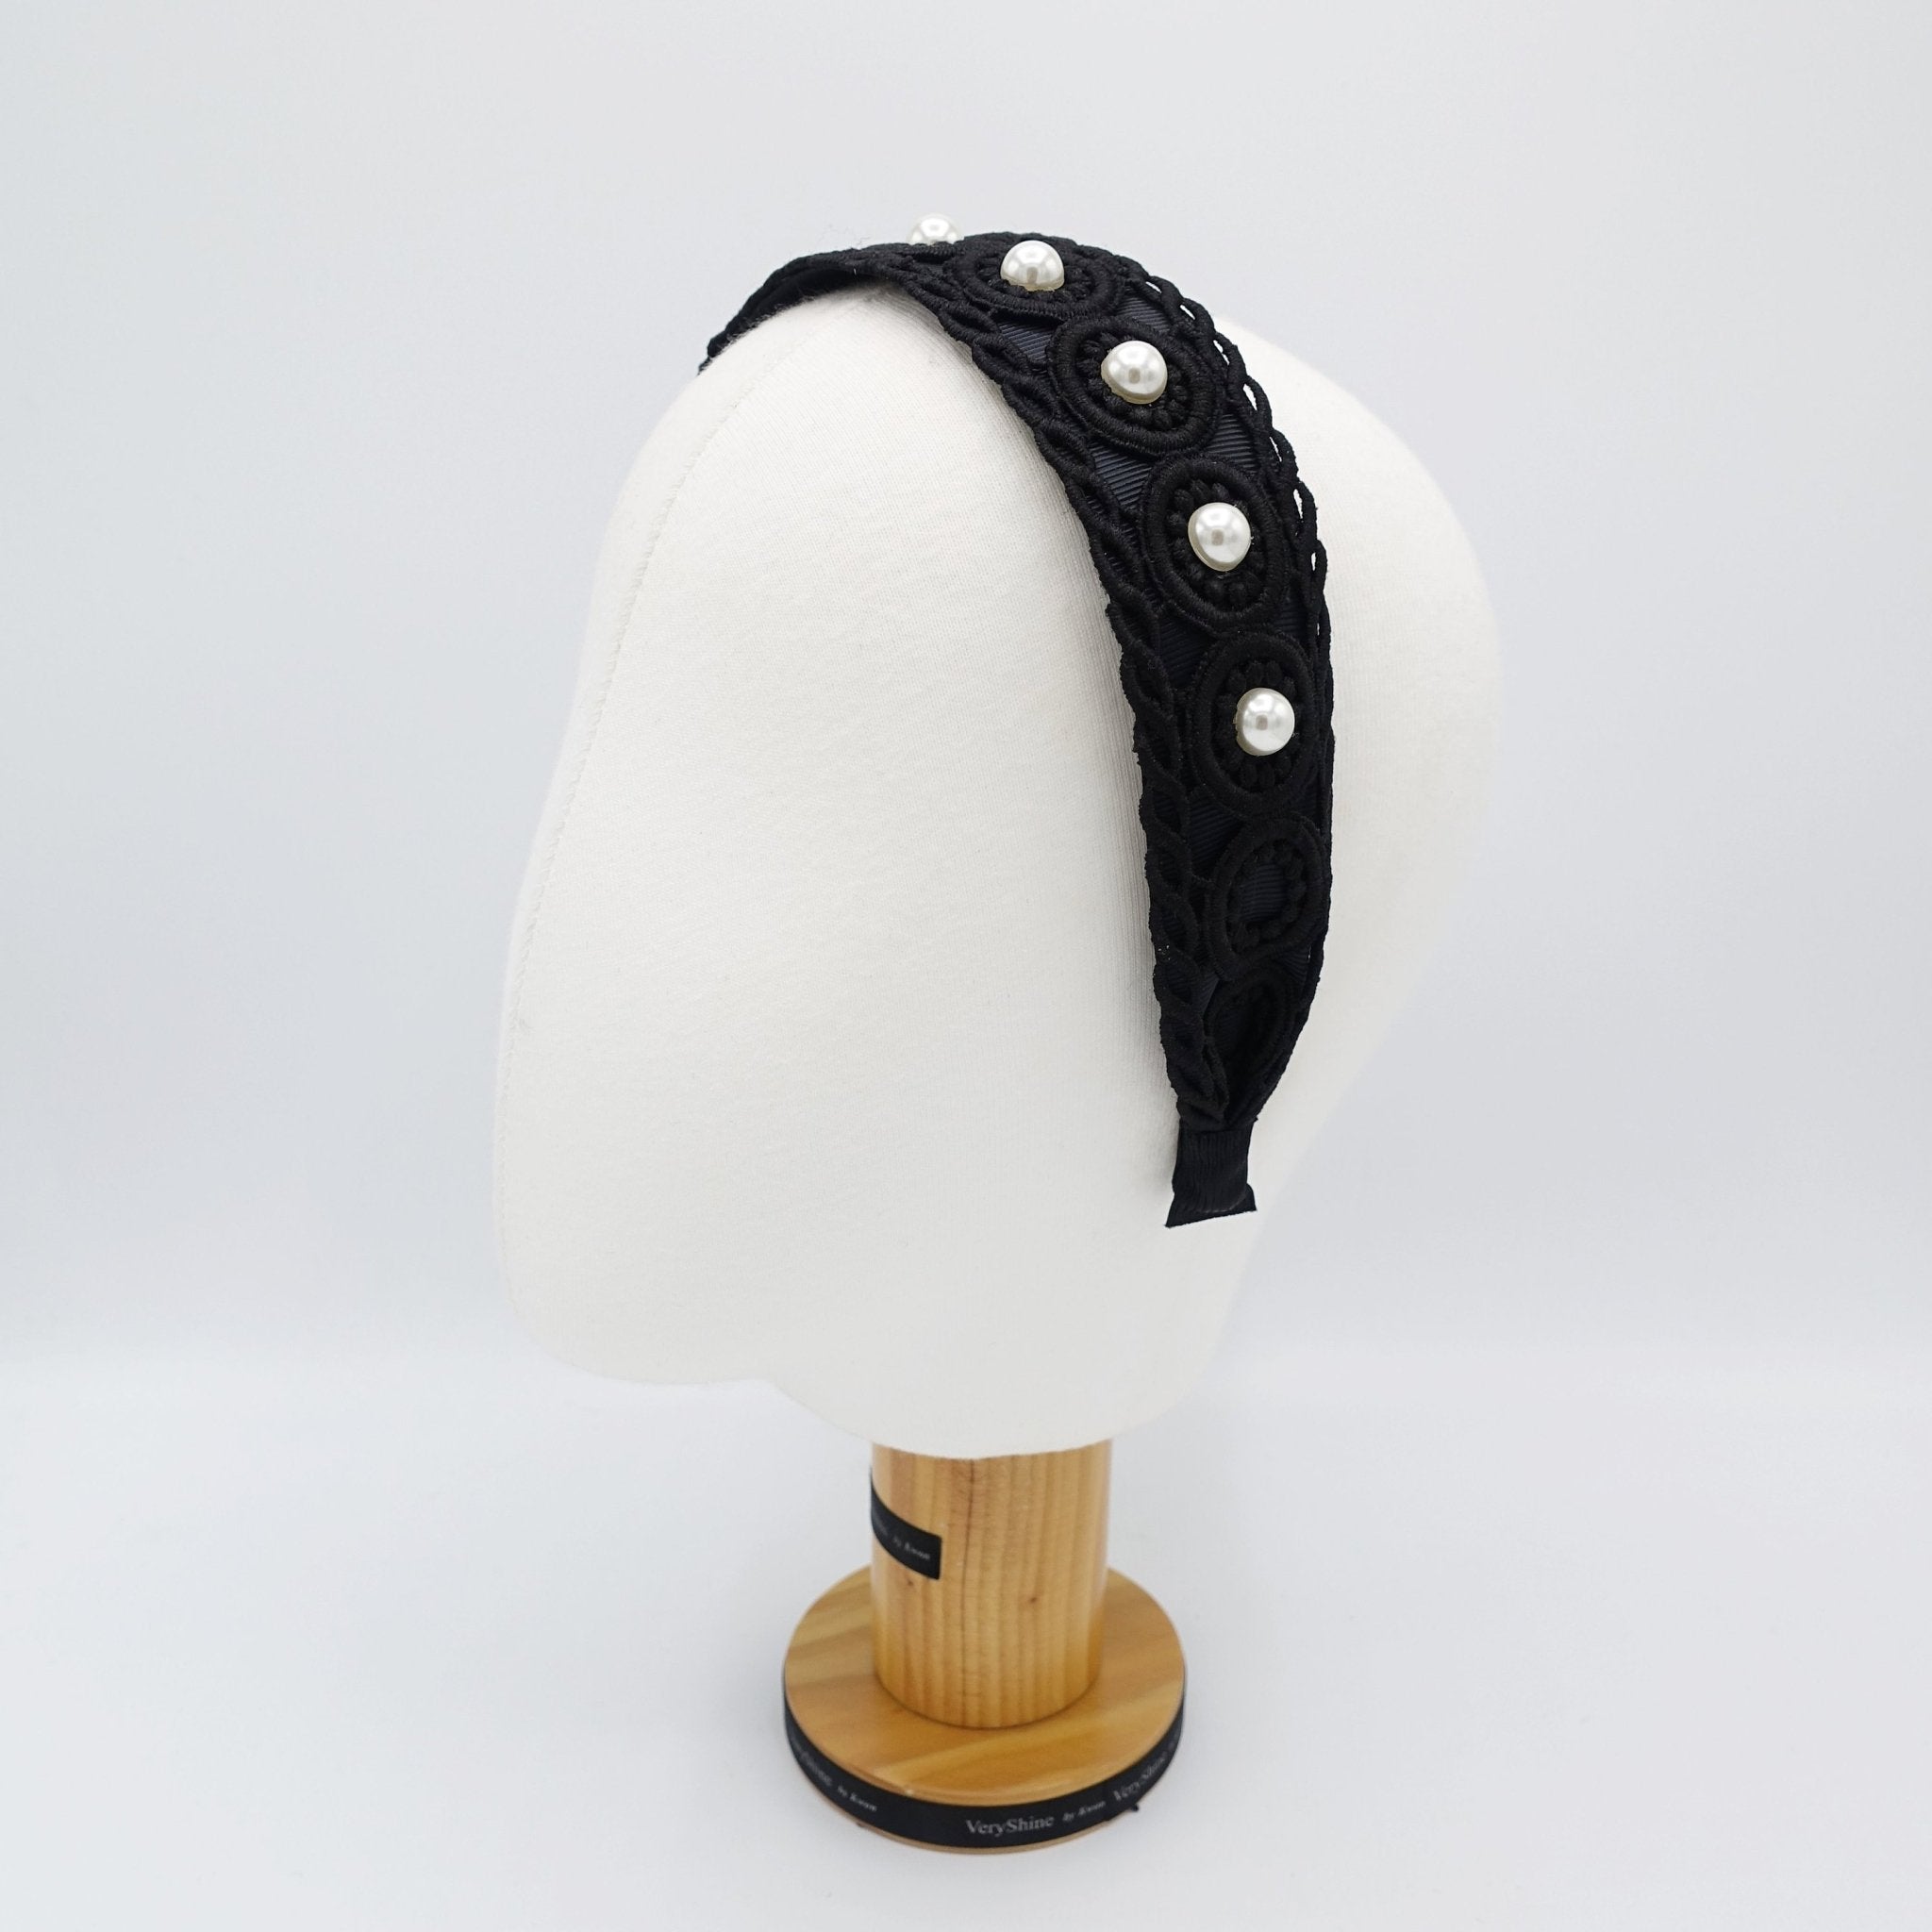 VeryShine pearl embellished circle ellipse headband for women